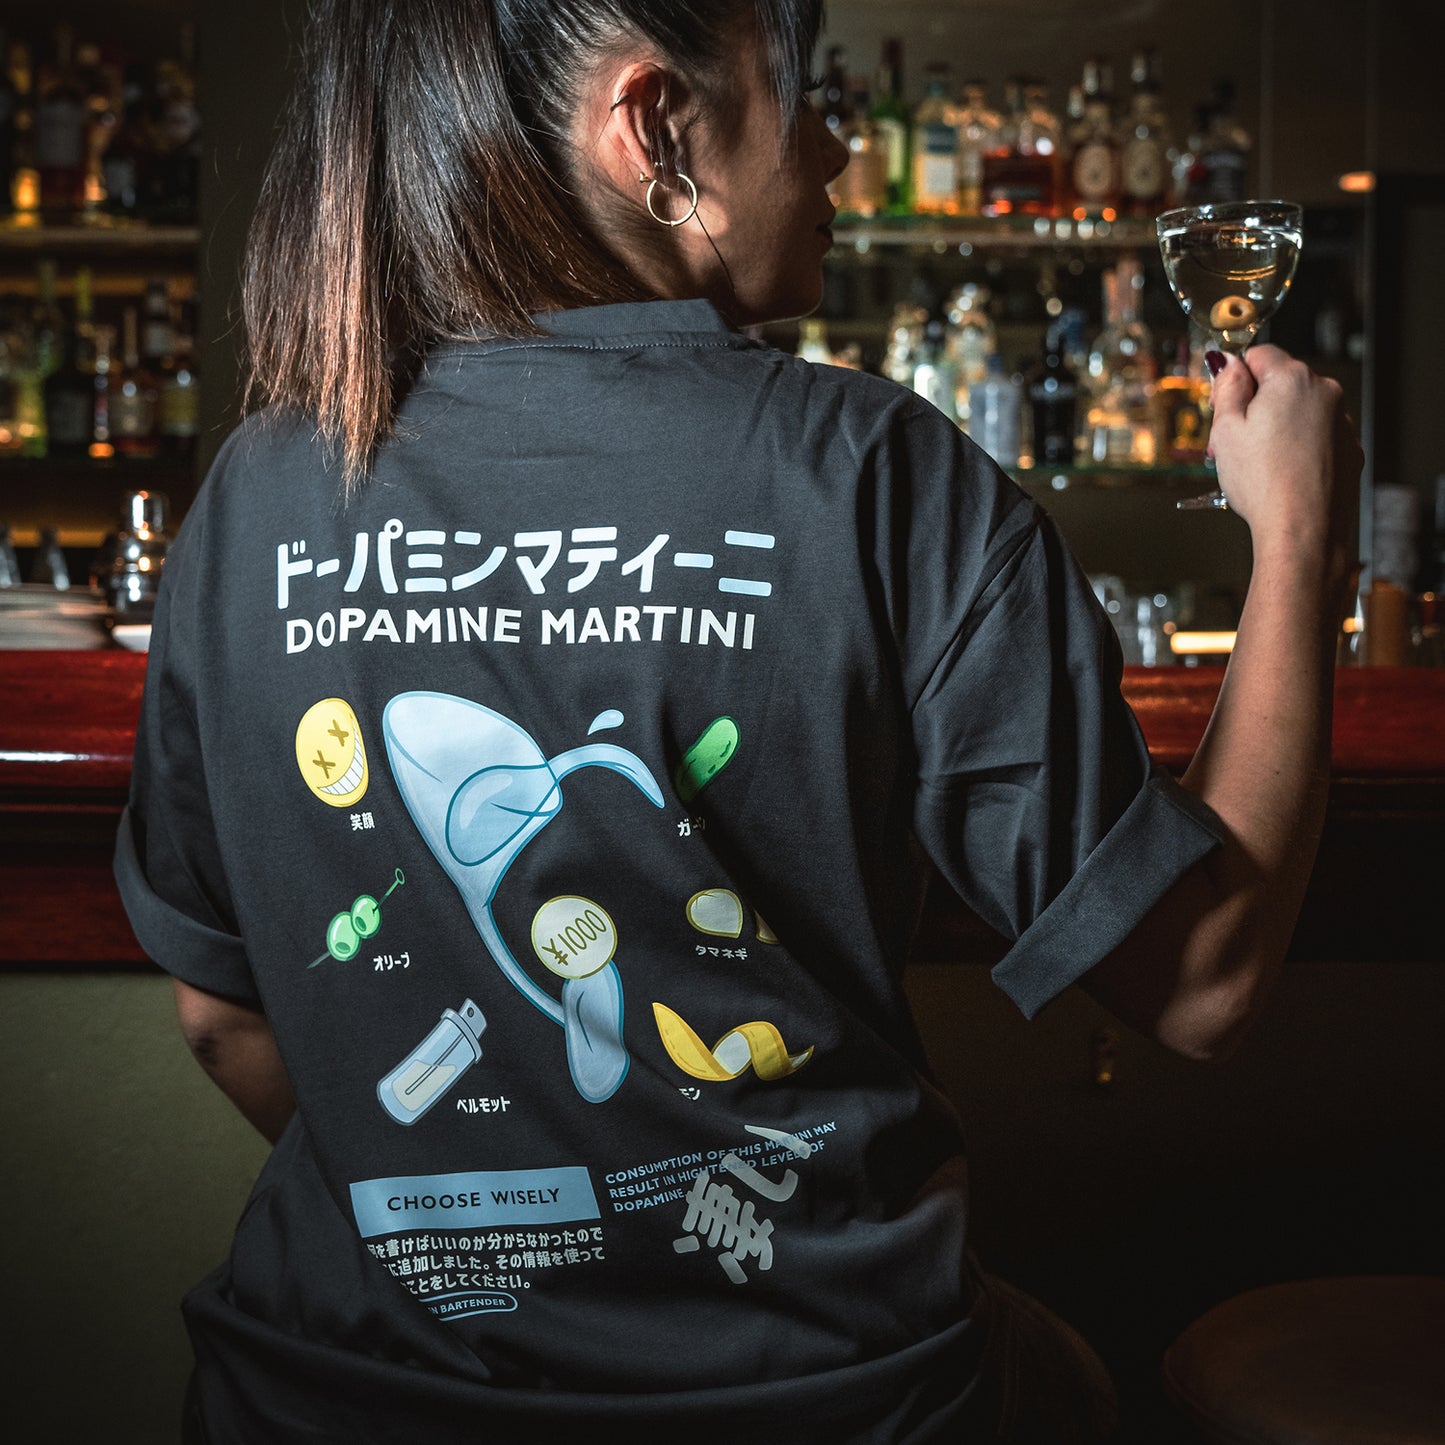 Dopamine Martini T-Shirt by Broken Bartender